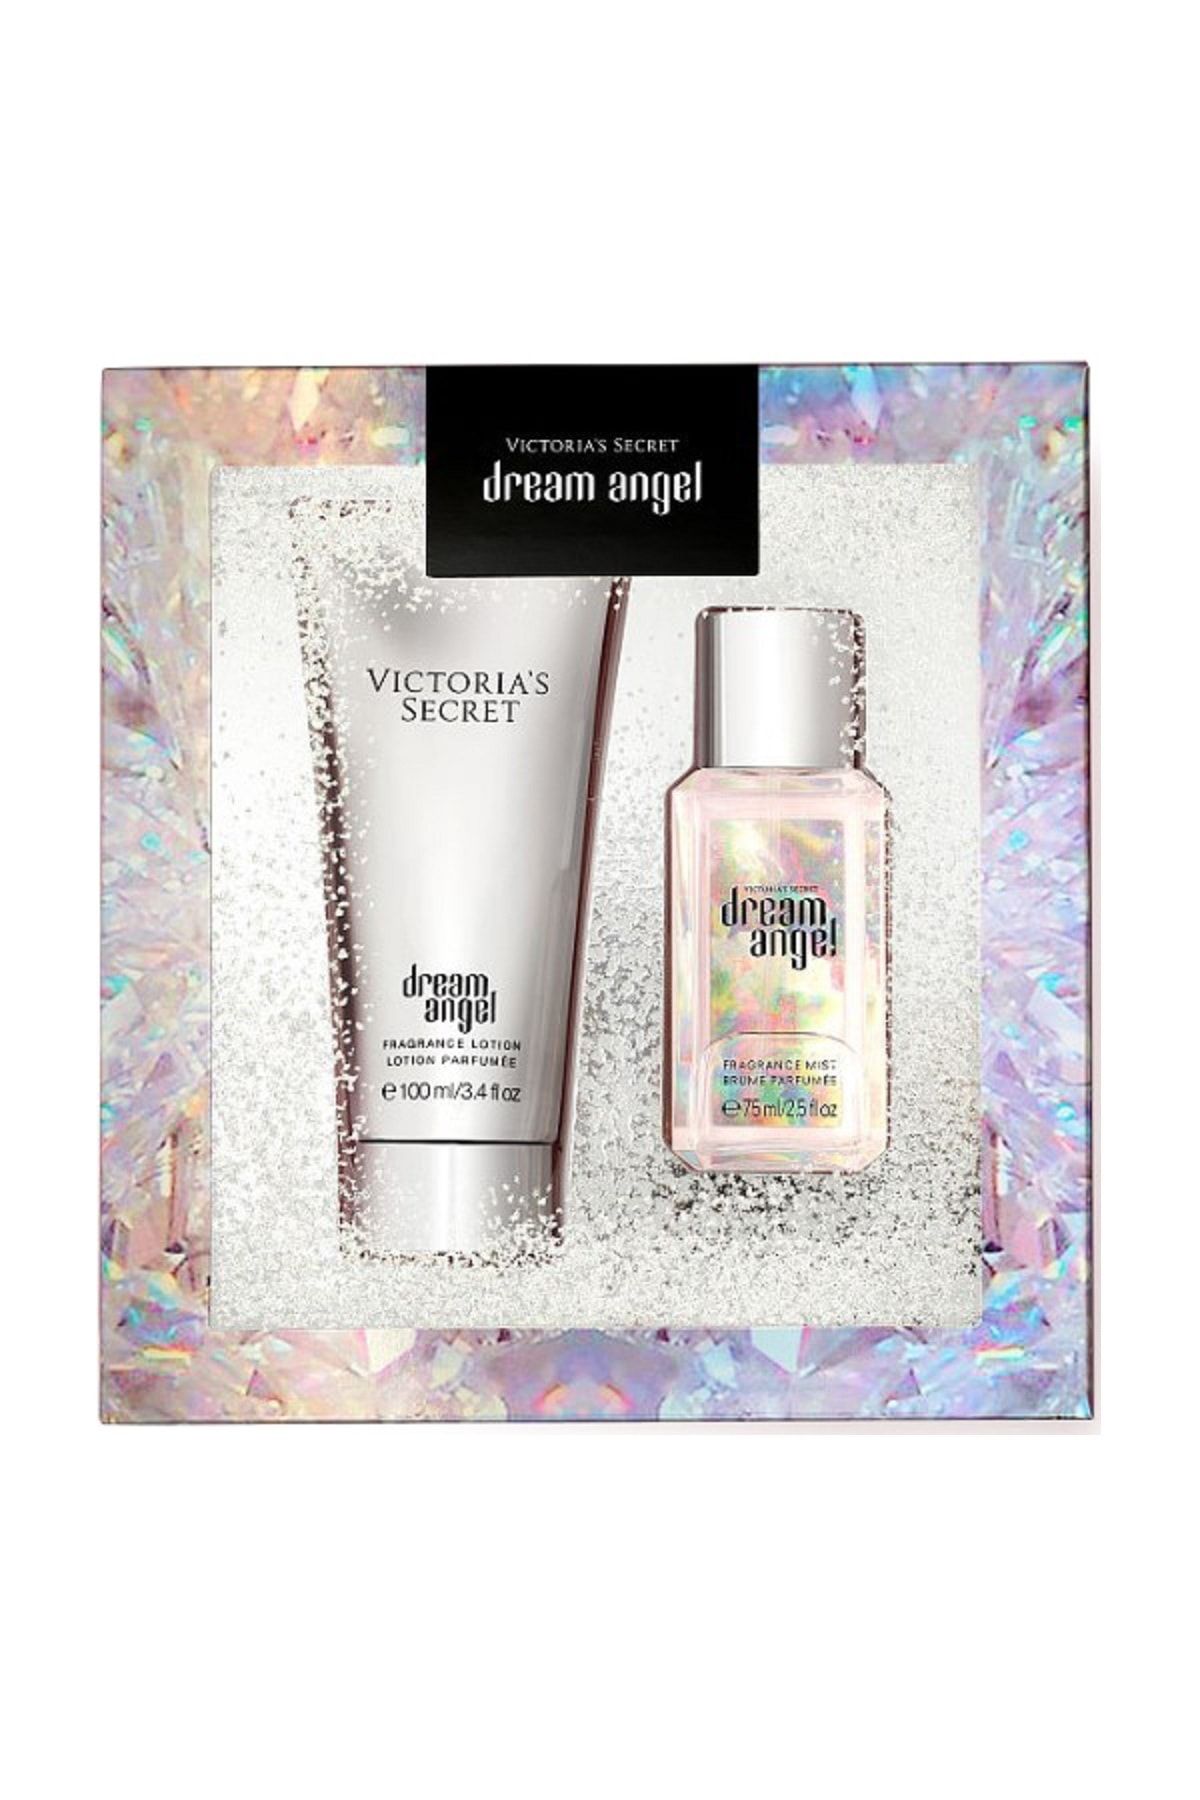 Body Splash Dream Angel Body Mist - Victoria's Secret - 75ml